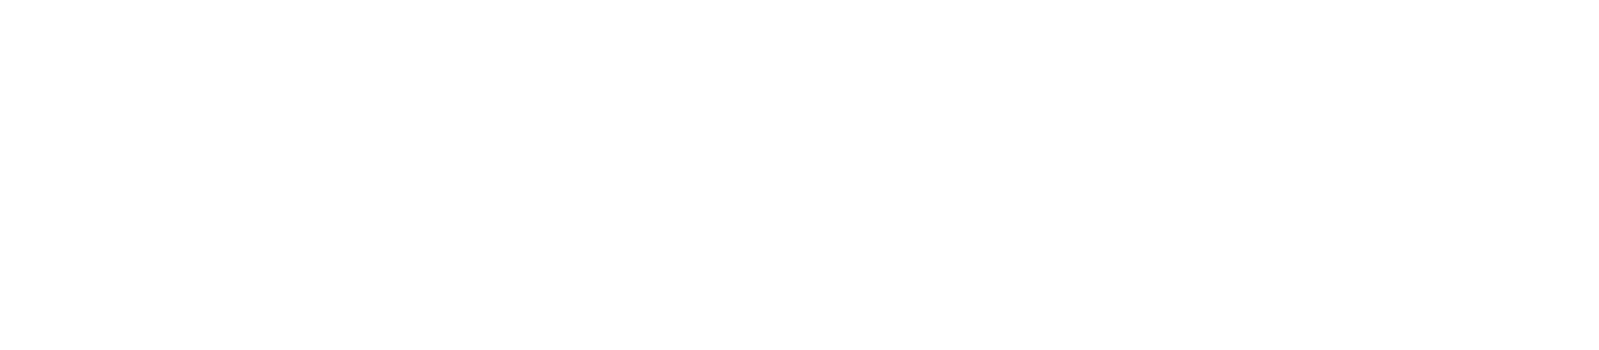 Pure Health Holding Logo groß für dunkle Hintergründe (transparentes PNG)